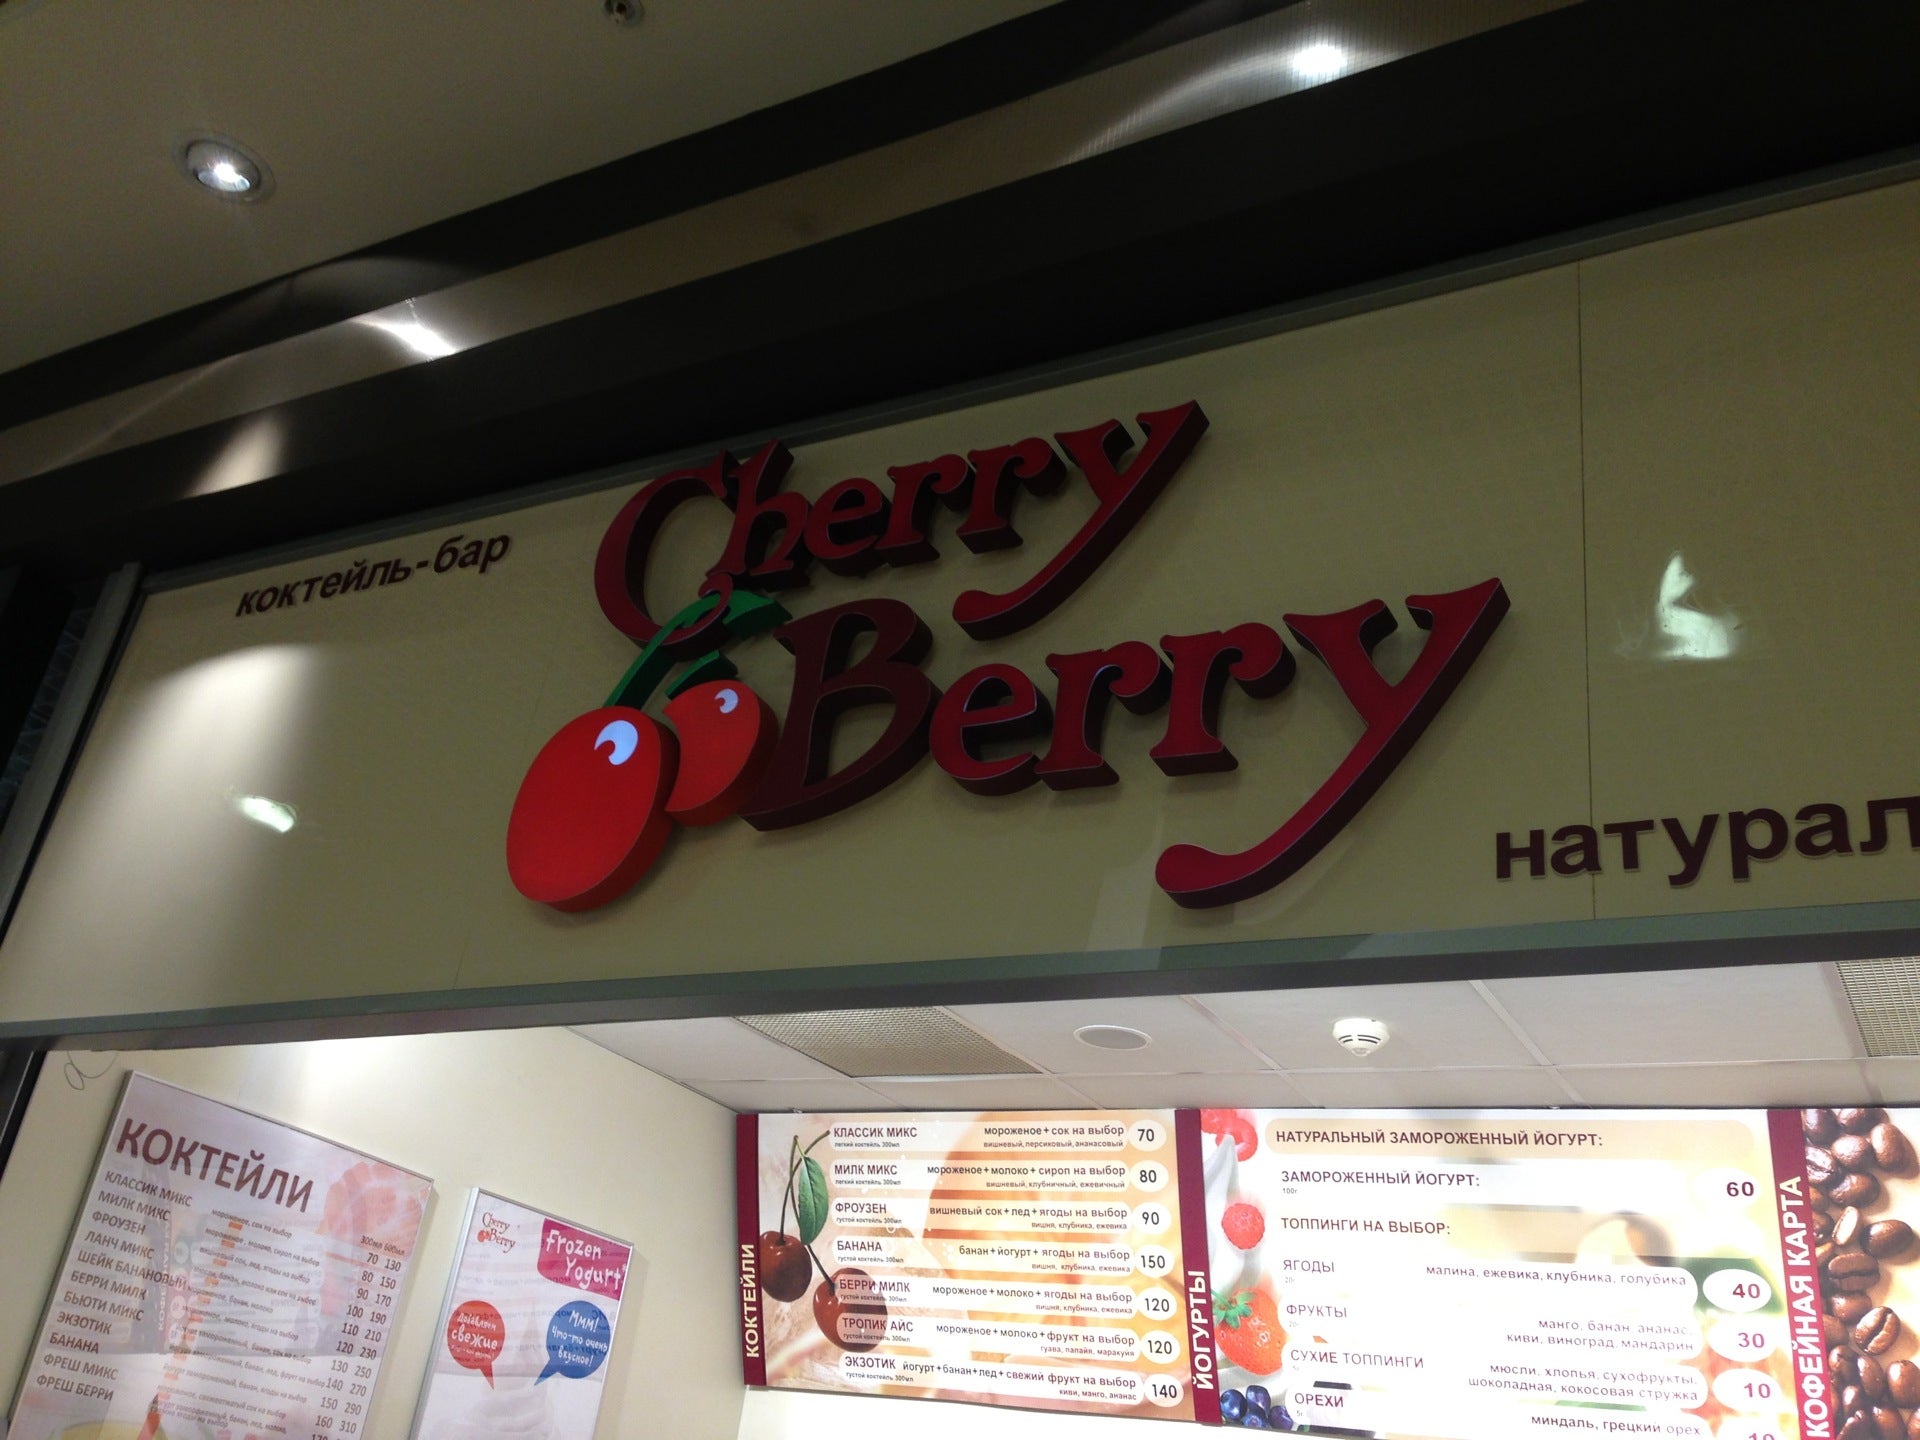 Cherryberry twitter